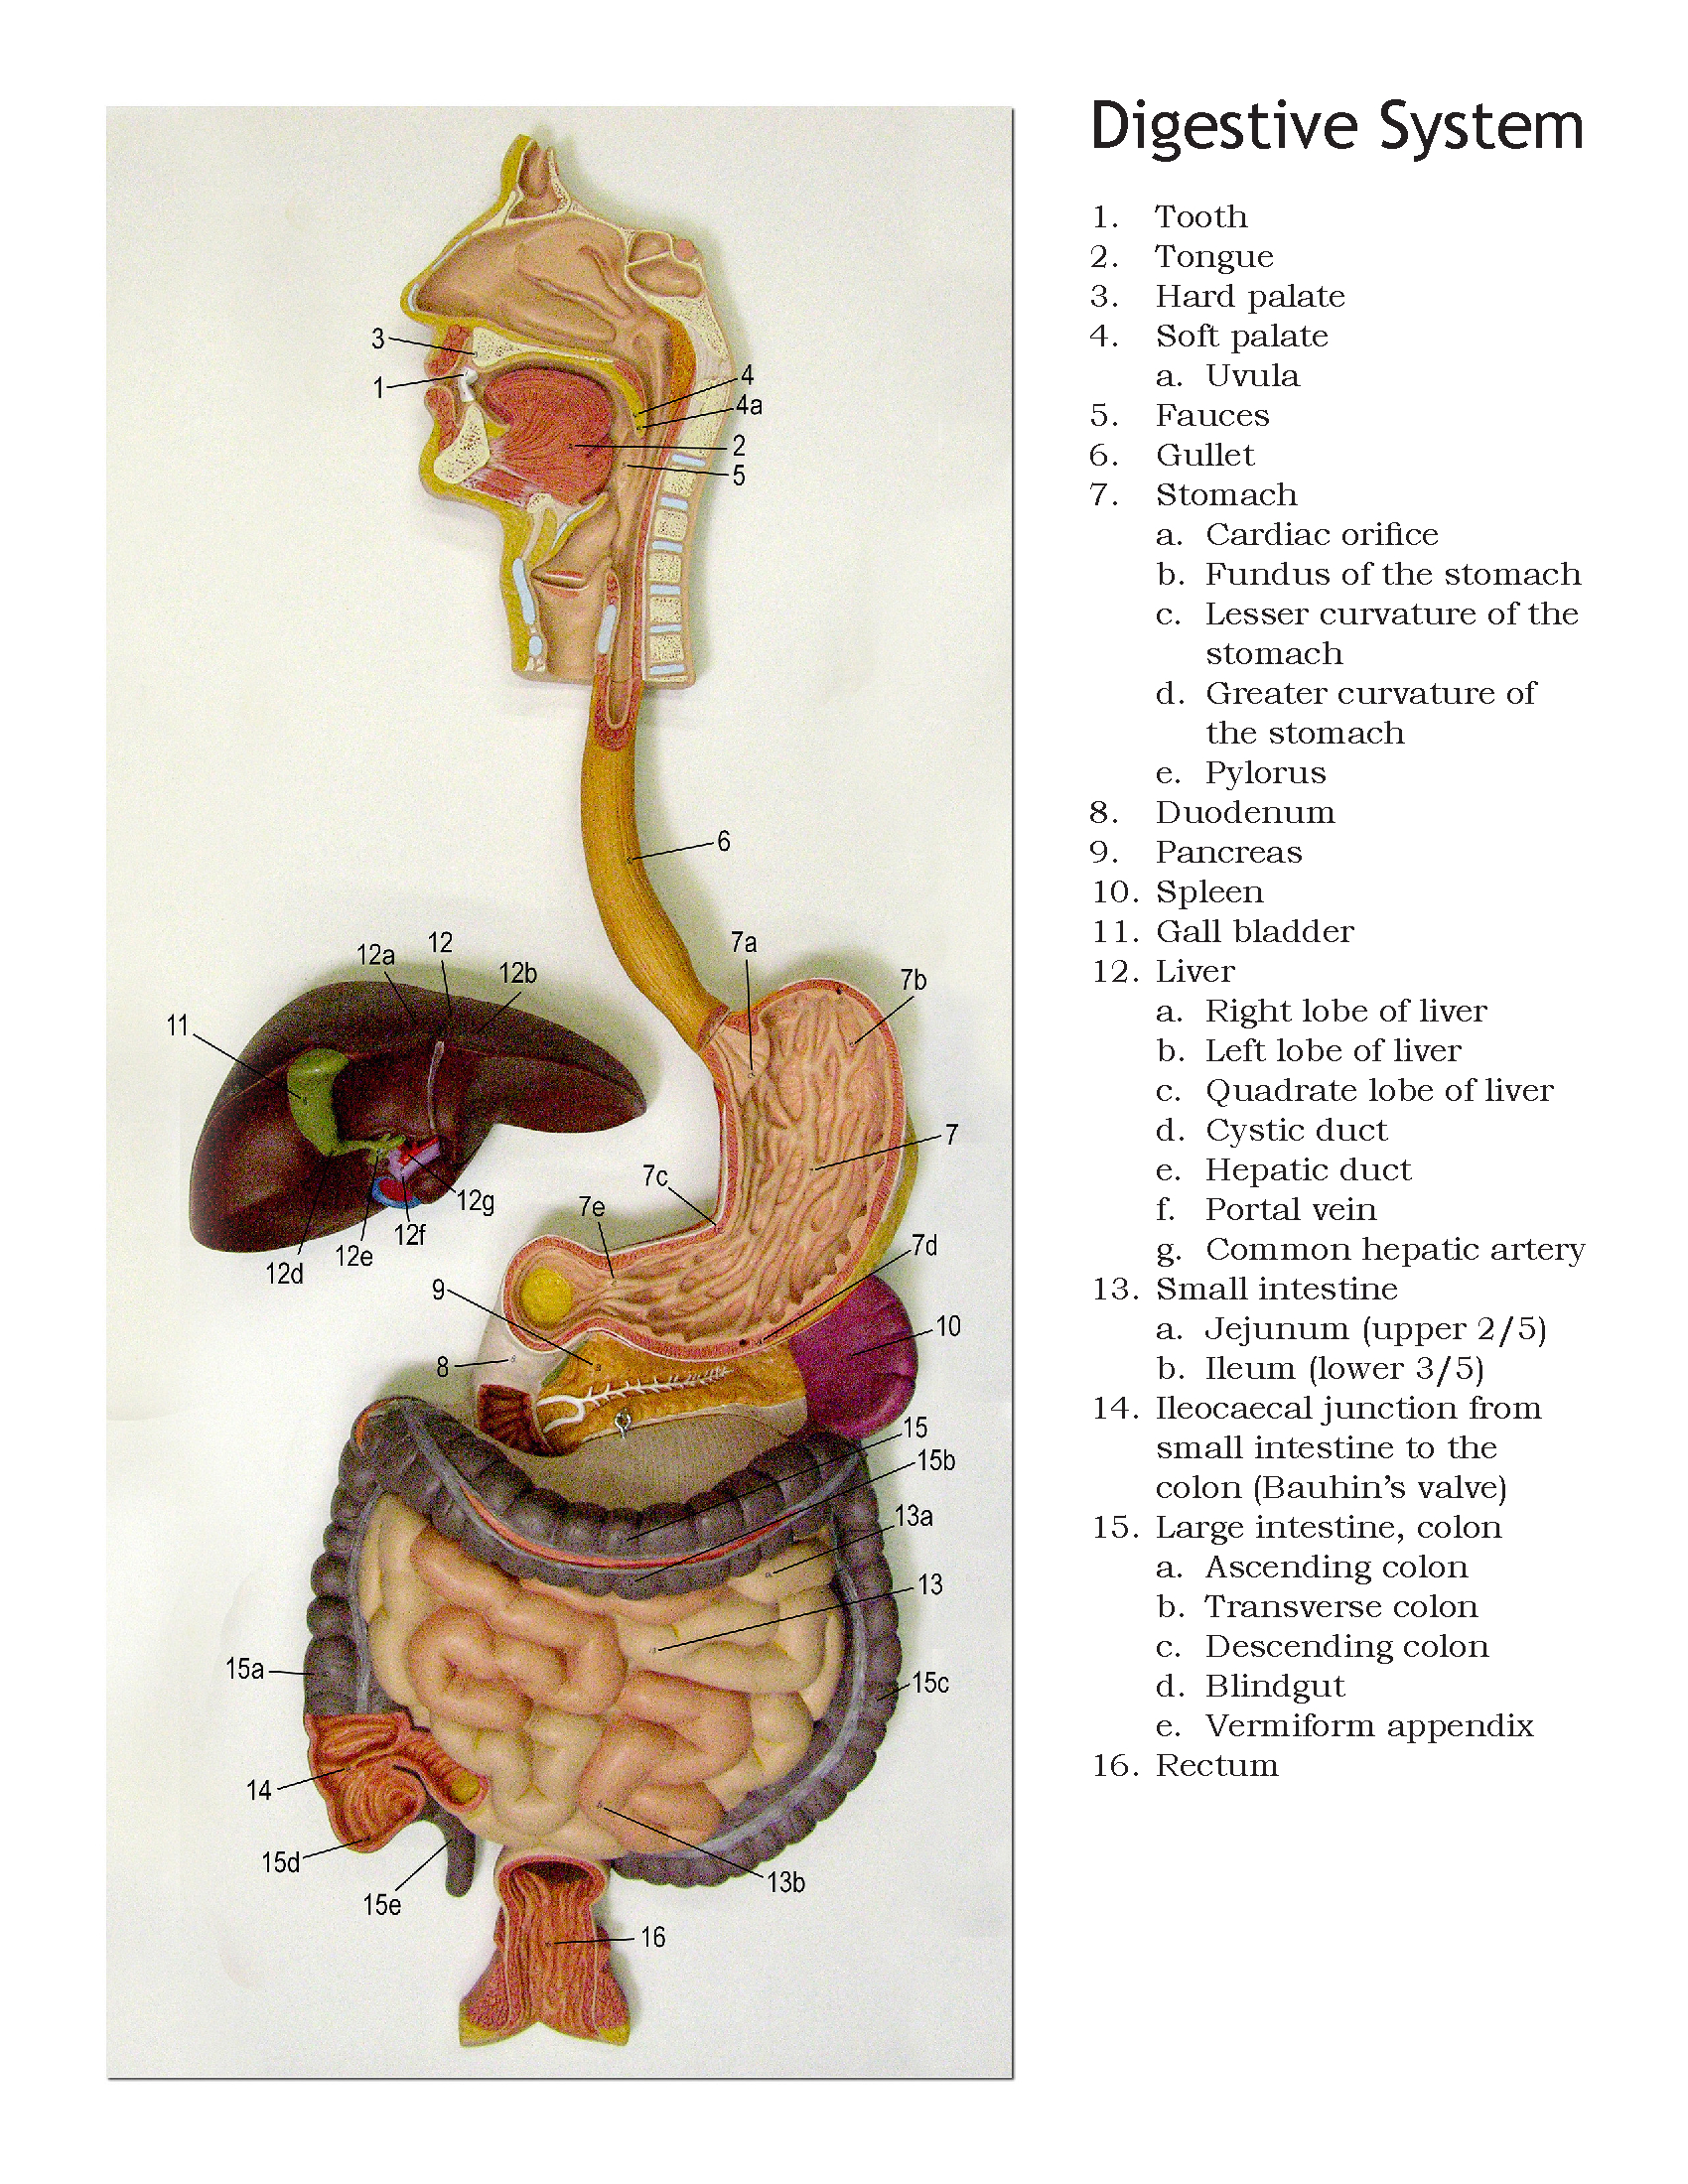 Digestive System Diagram Human Digestive System Diagram Anatomical Models Ball State